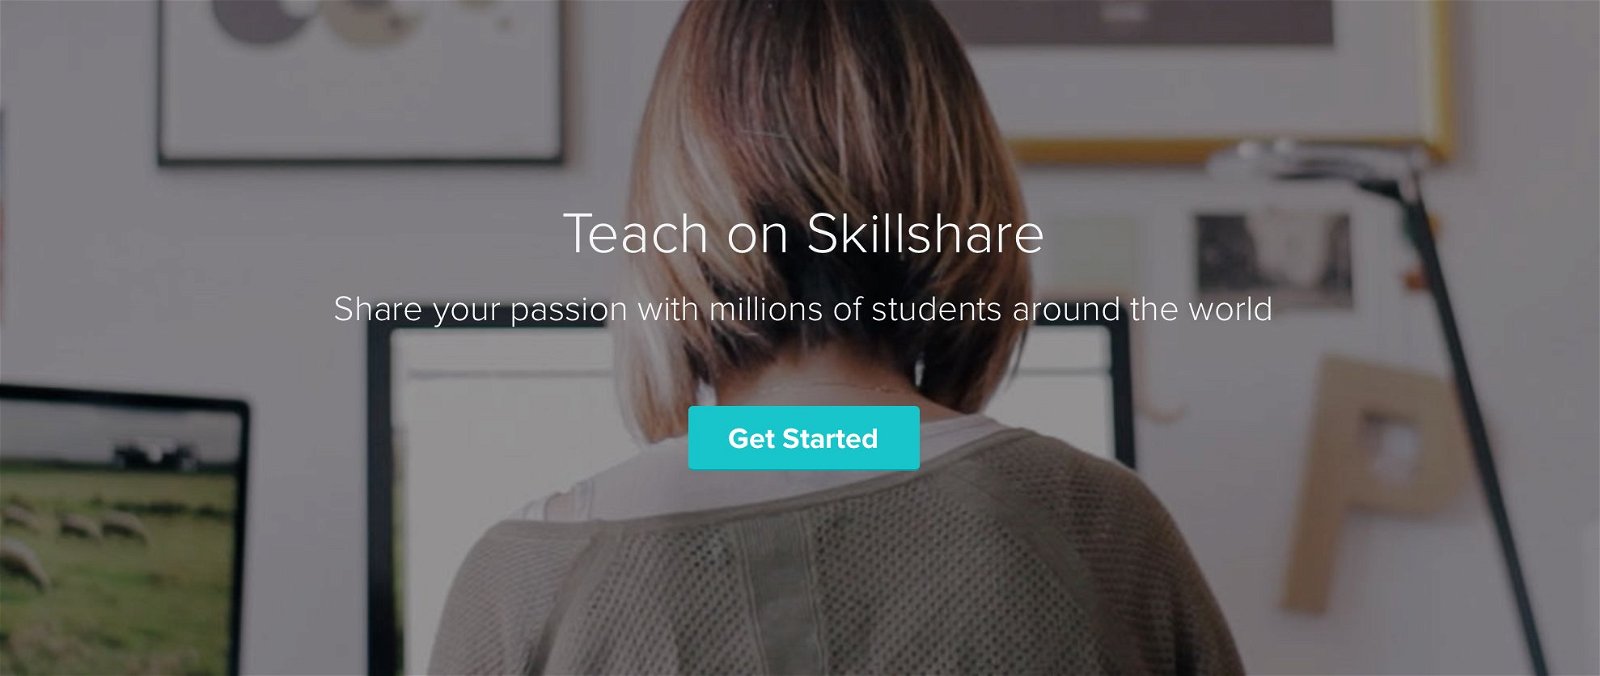 Teach on Skillshare